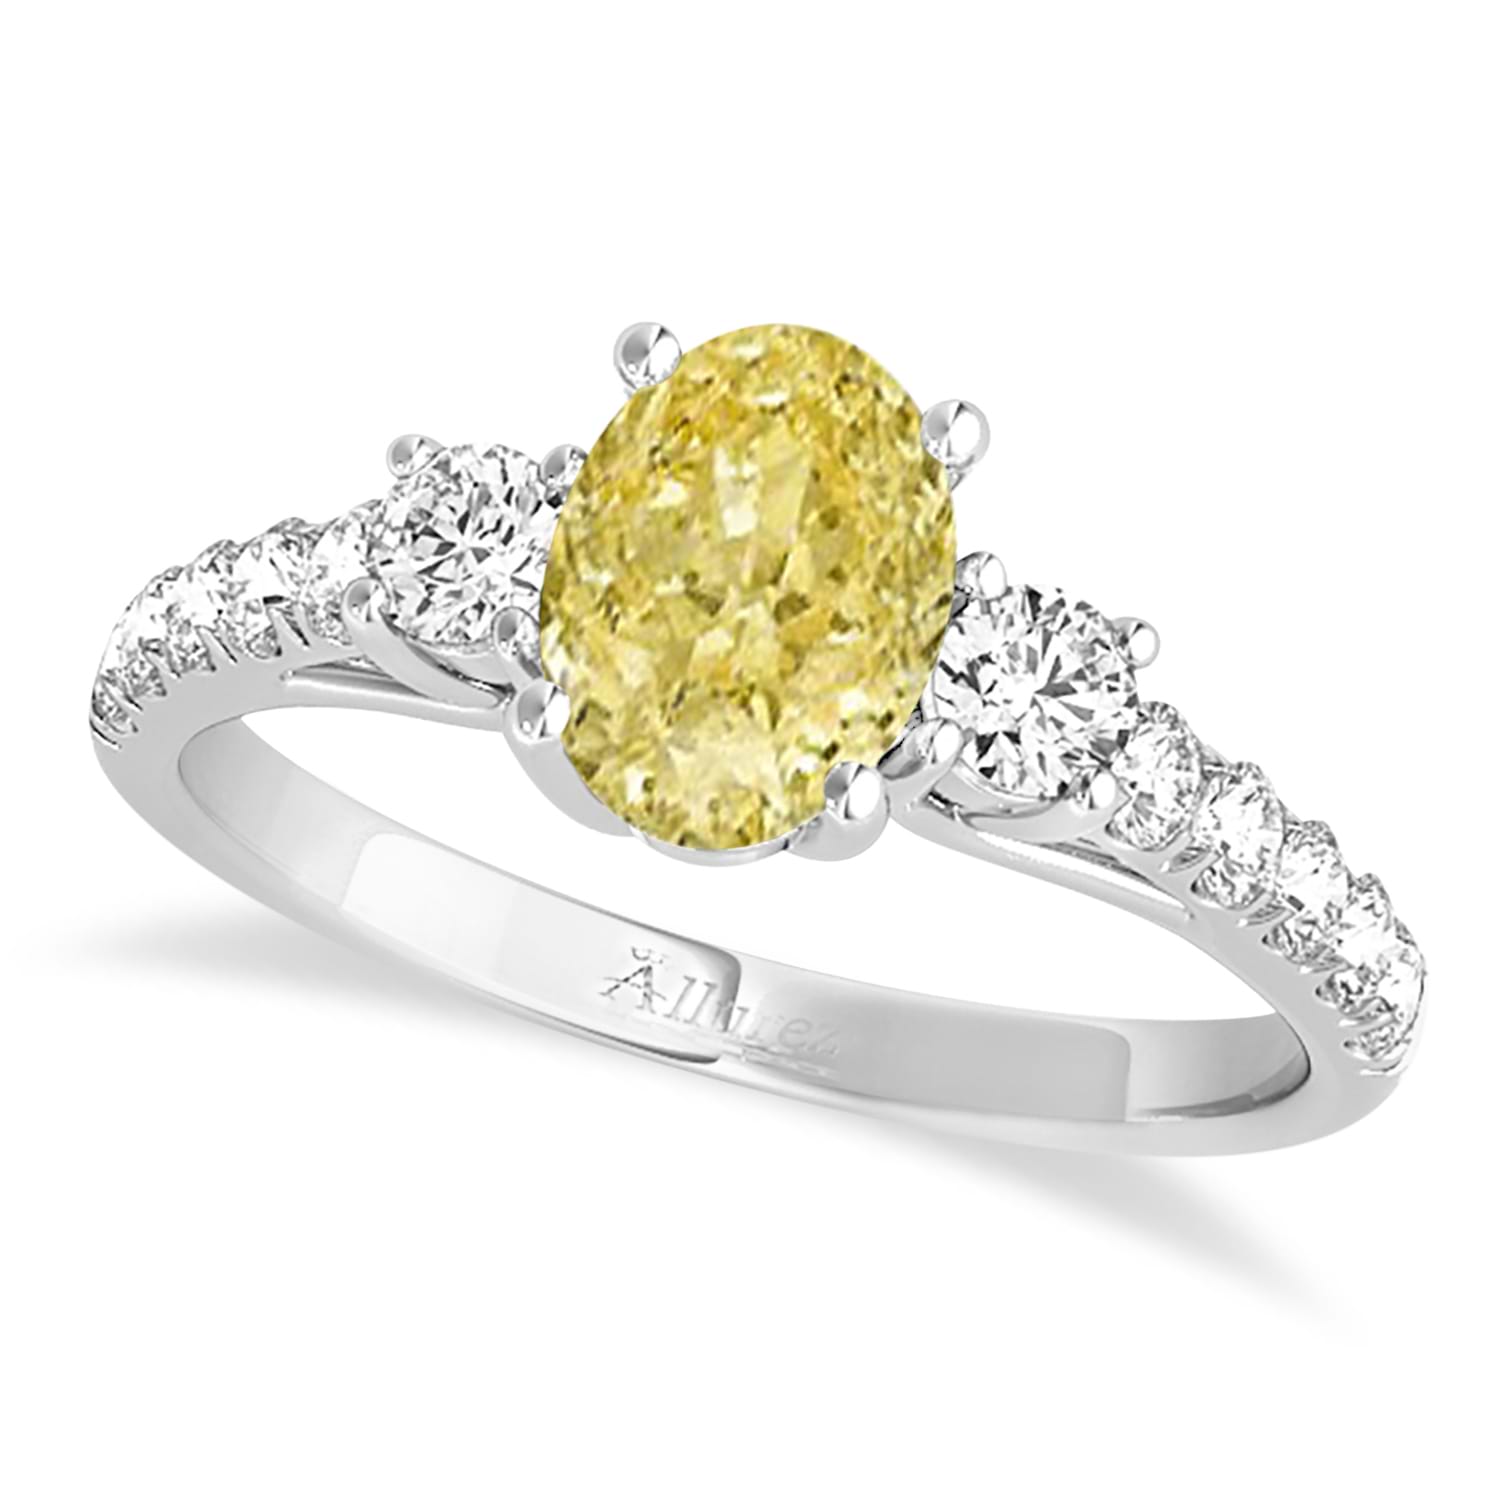 Oval Cut Yellow Diamond & Diamond Engagement Ring Palladium (1.40ct)